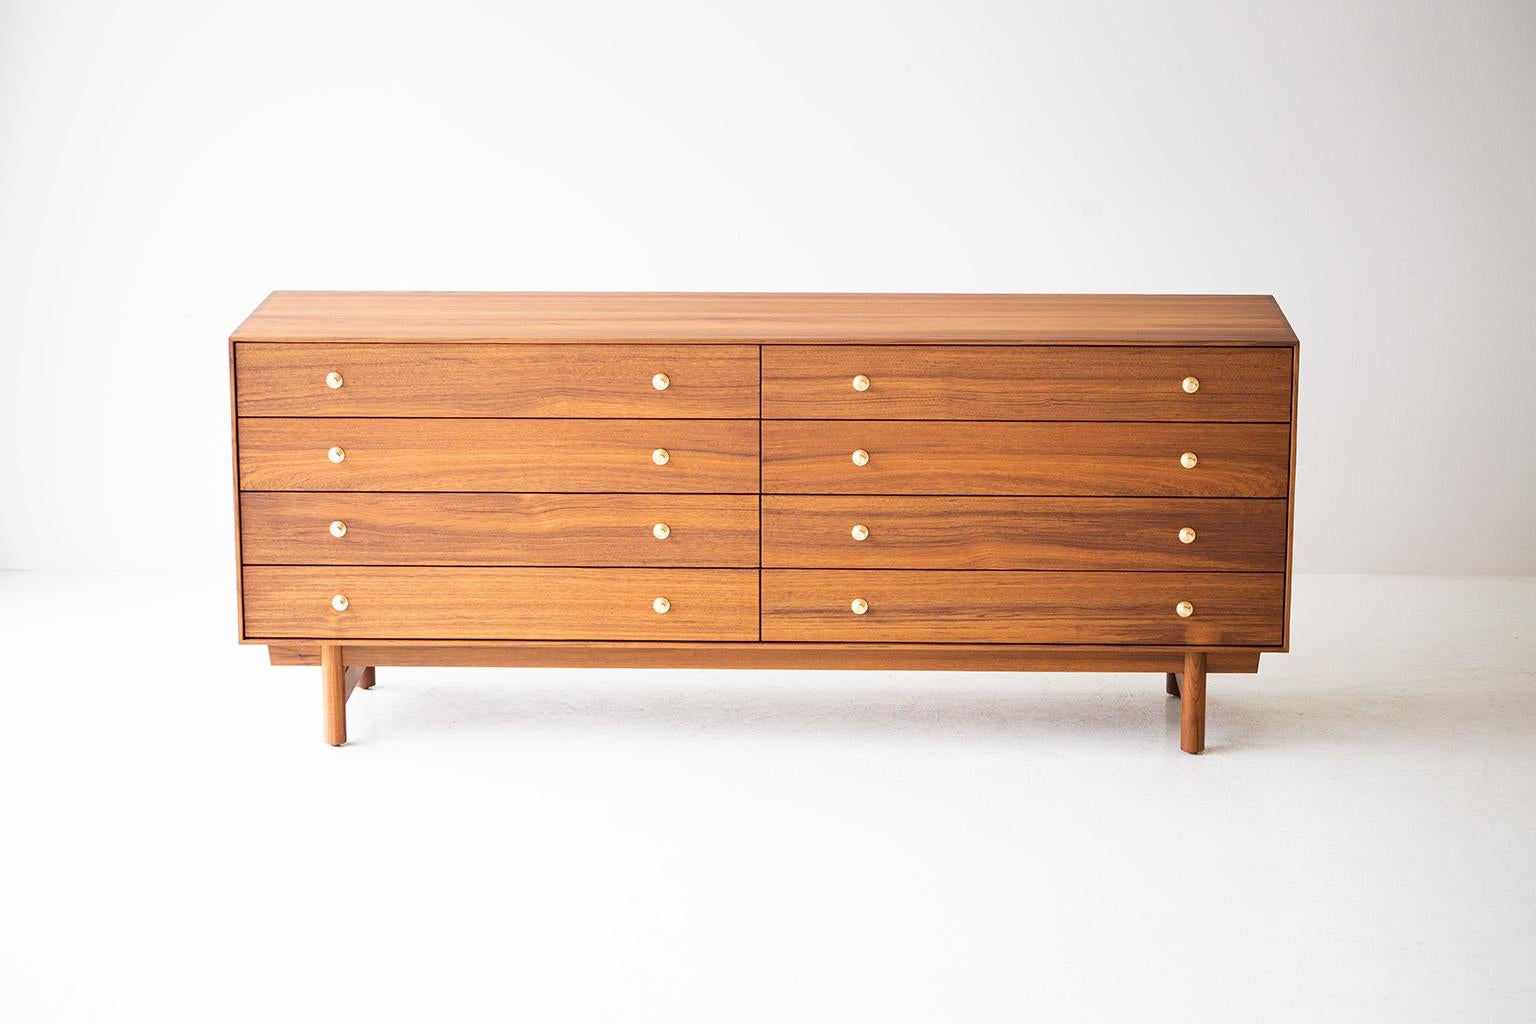 Contemporary Lawrence Peabody Teak Dresser 2202P for Craft Associates Furniture For Sale